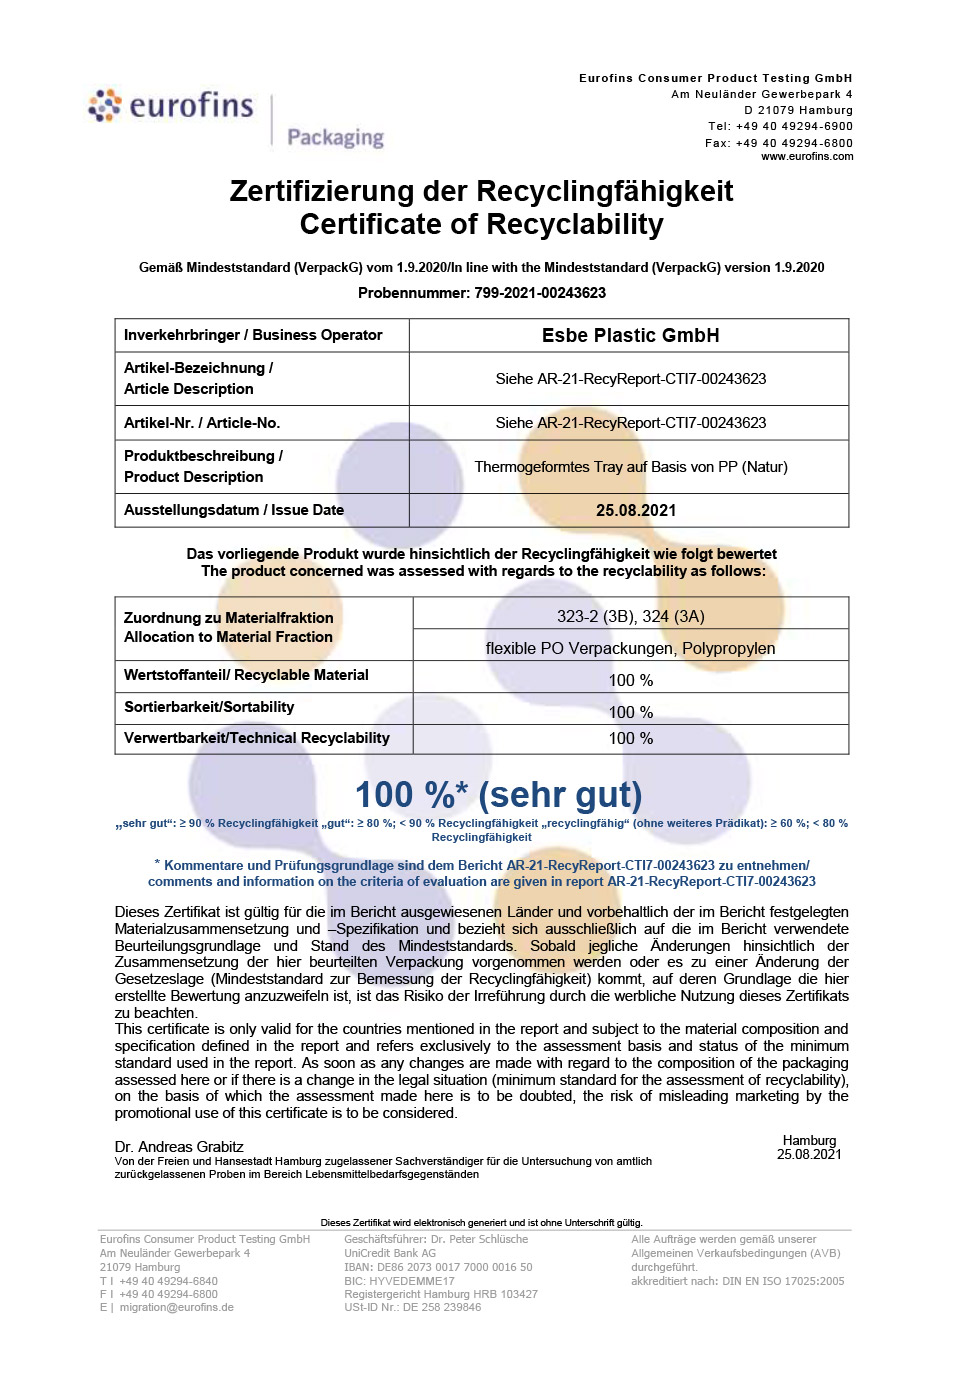 Zertifikat Recyclingfahigkeit esbe plastic GmbH